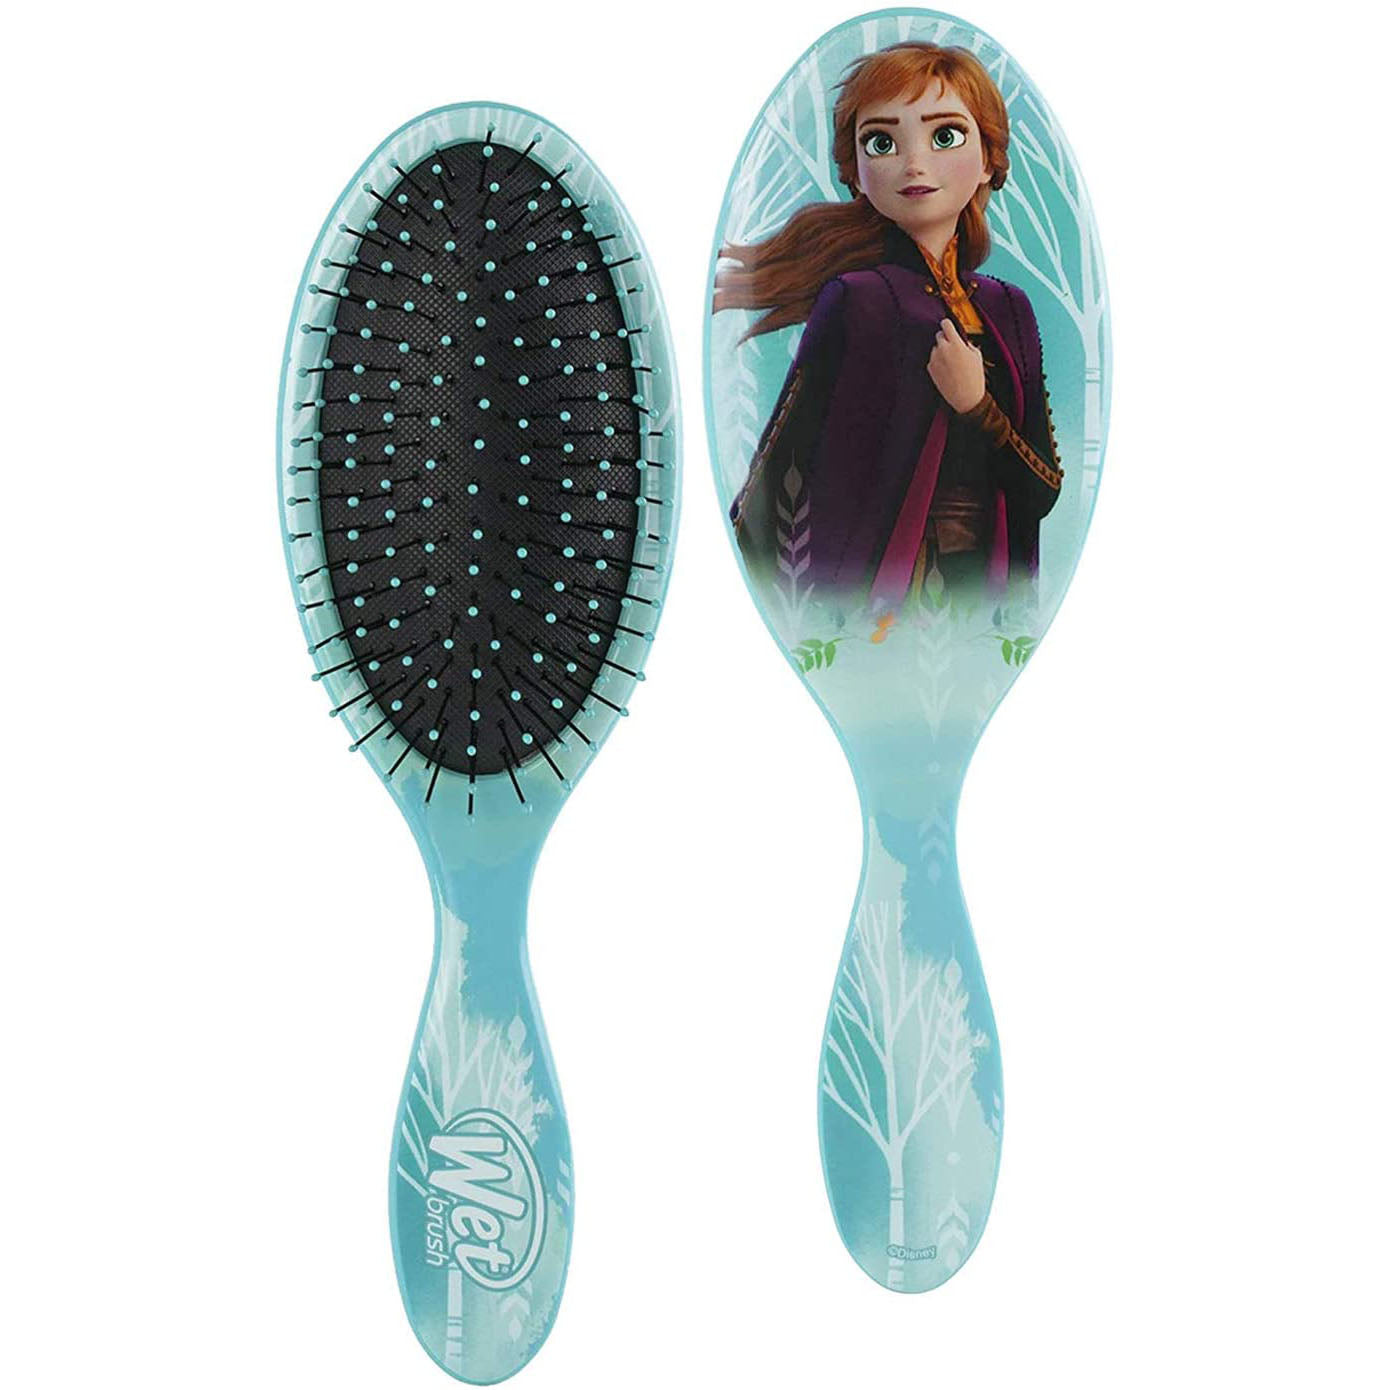 Wet Brush - Original Detangler Frozen 2 Brushes - Creata Beauty - Professional Beauty Products